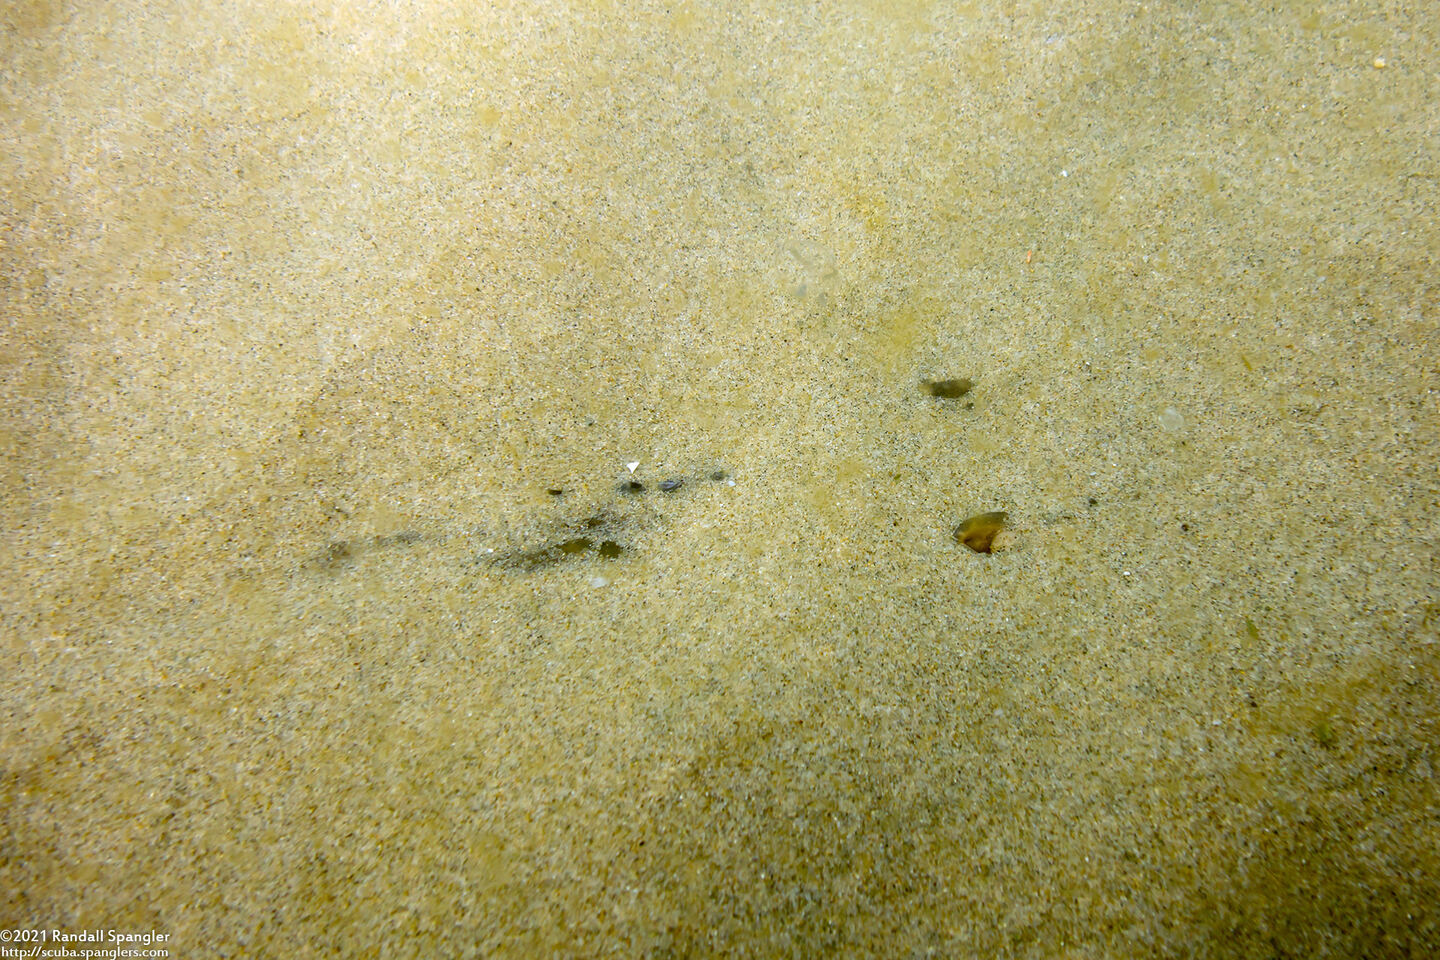 Platyrhinoidis triseriata (Thornback); Buried in sand